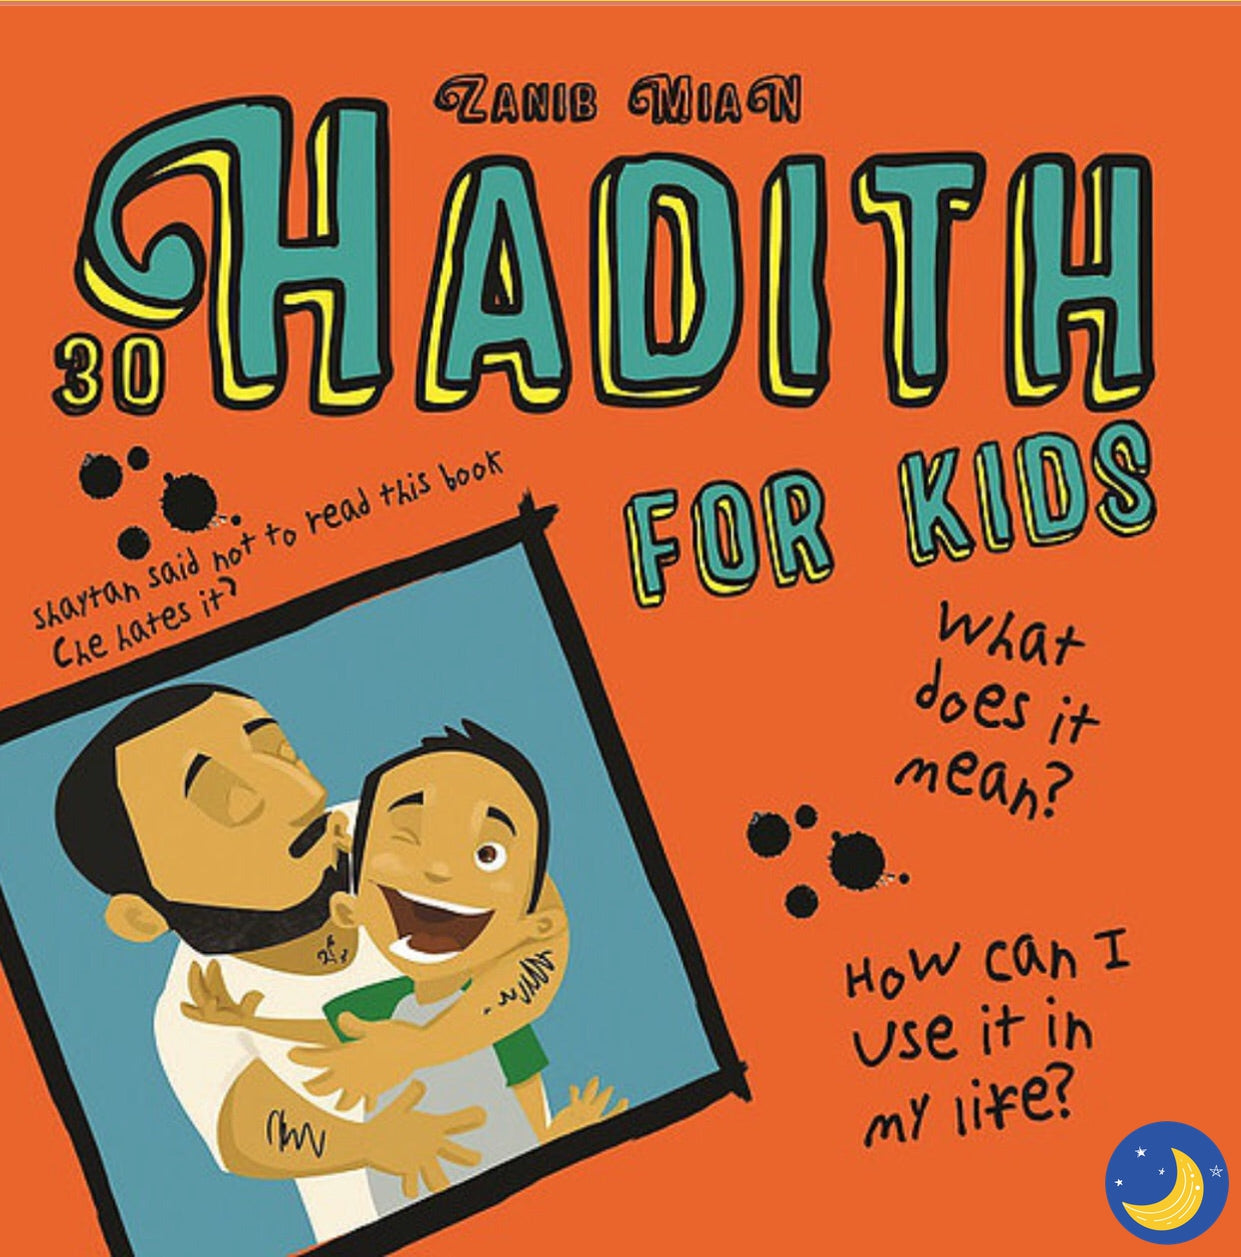 30 Hadith for Kids Book-Islamic Books-Muslim Children’s Books UK-Crescent Moon Store